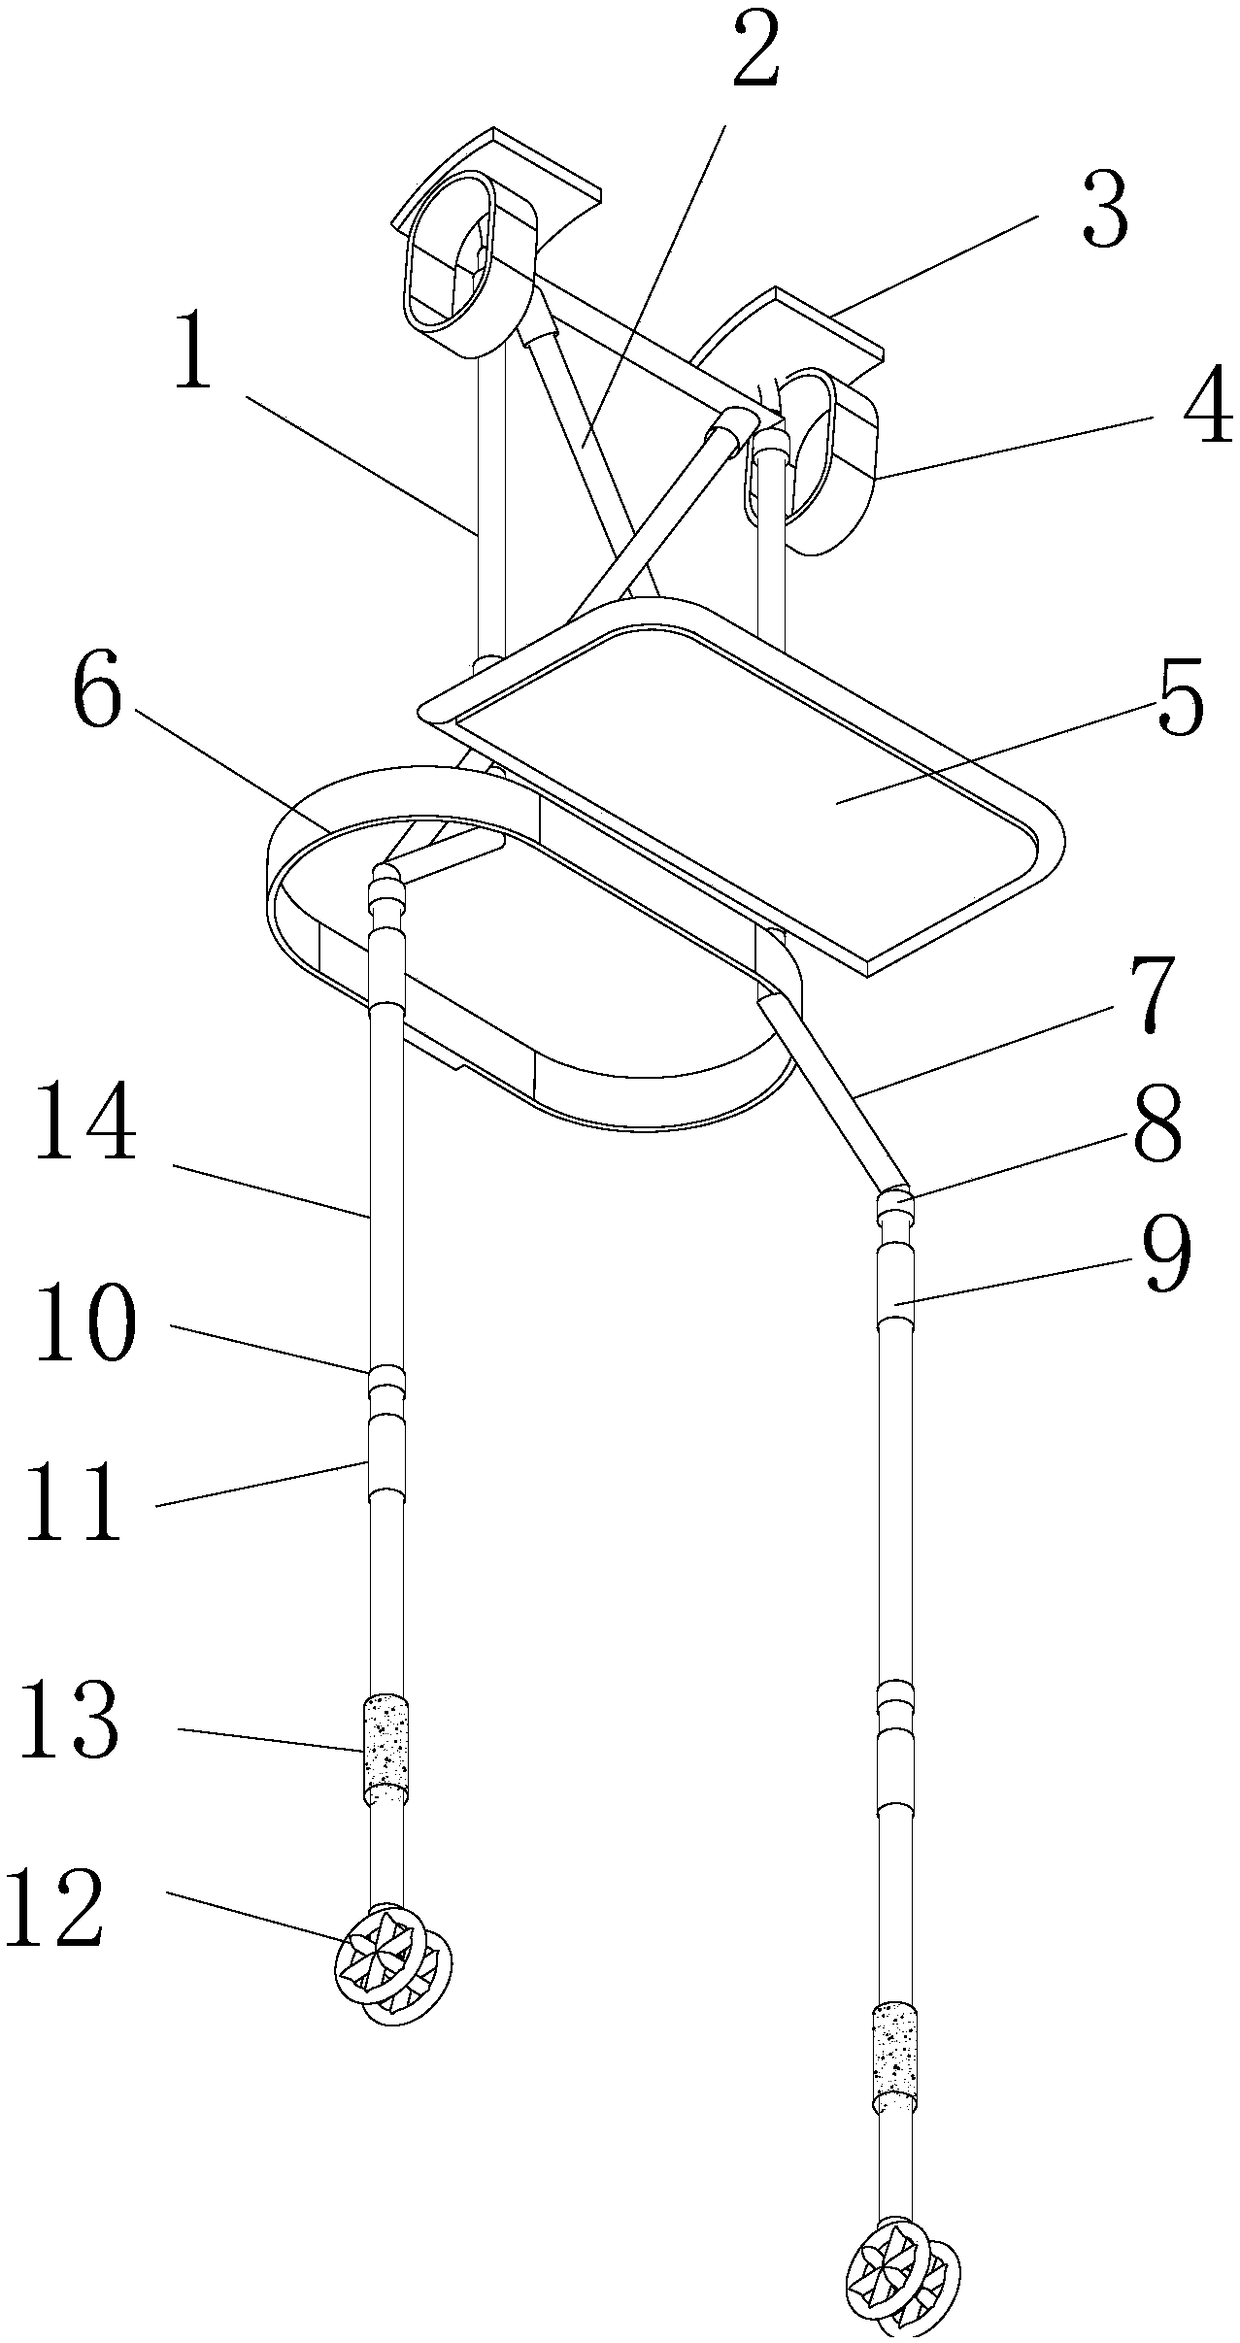 Pressure alternating conduction type simple exoskeleton